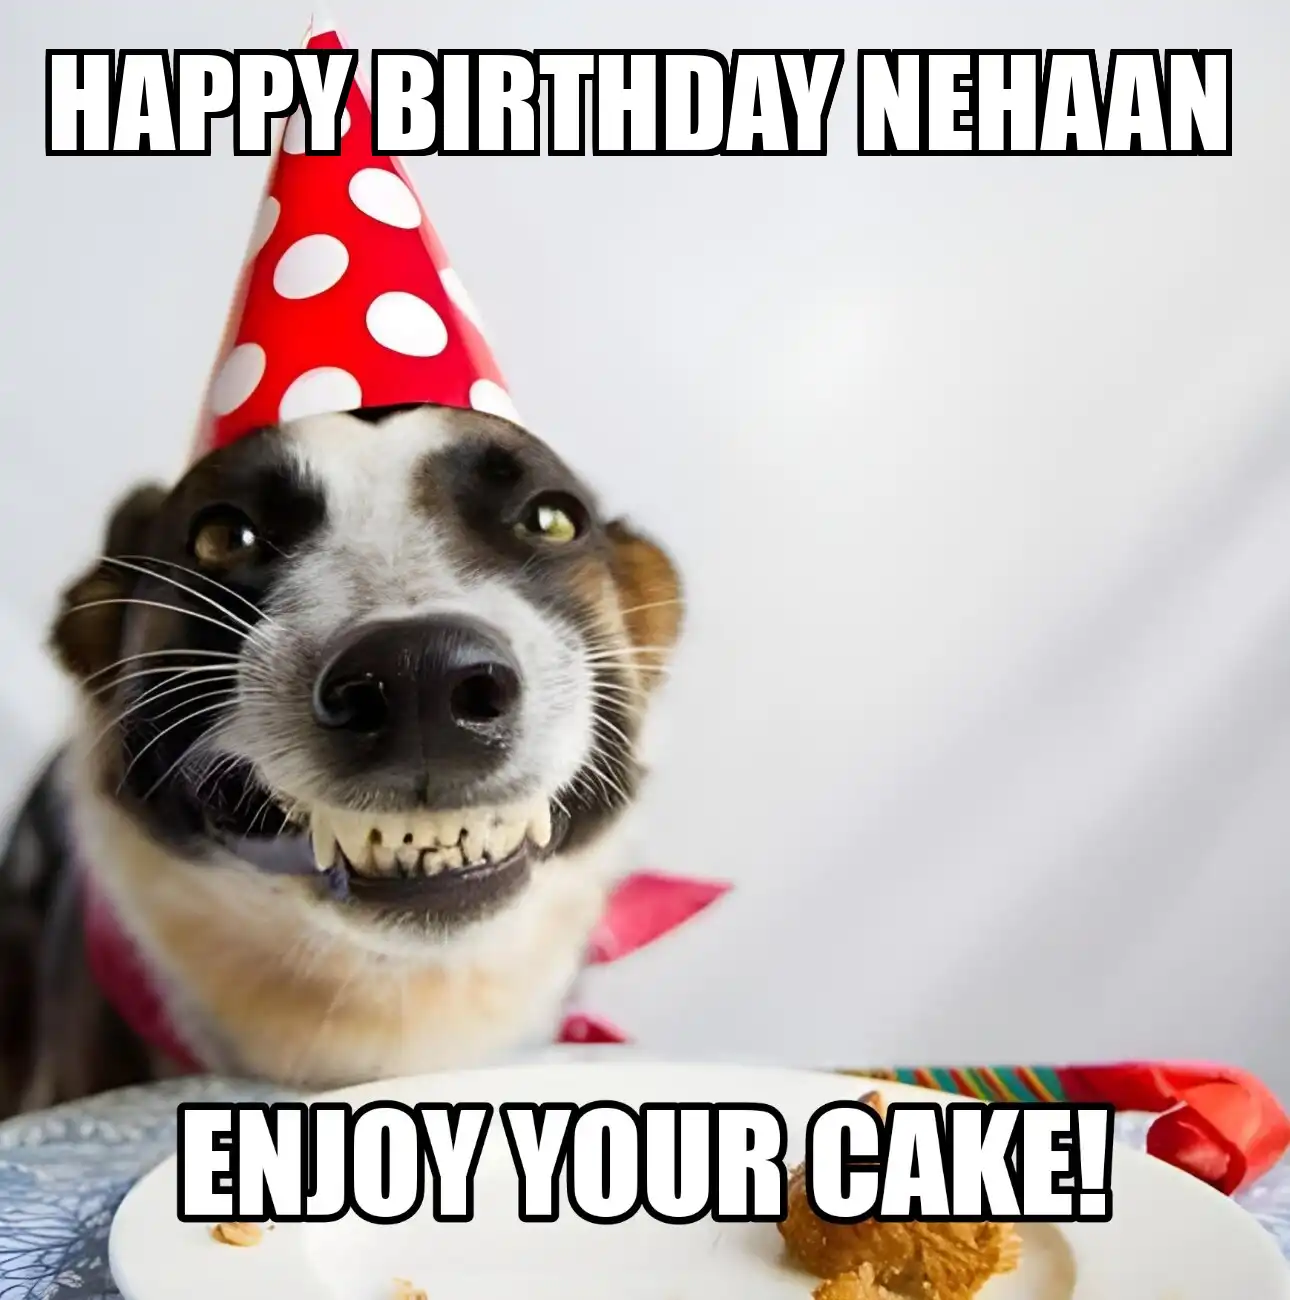 Happy Birthday Nehaan Enjoy Your Cake Dog Meme